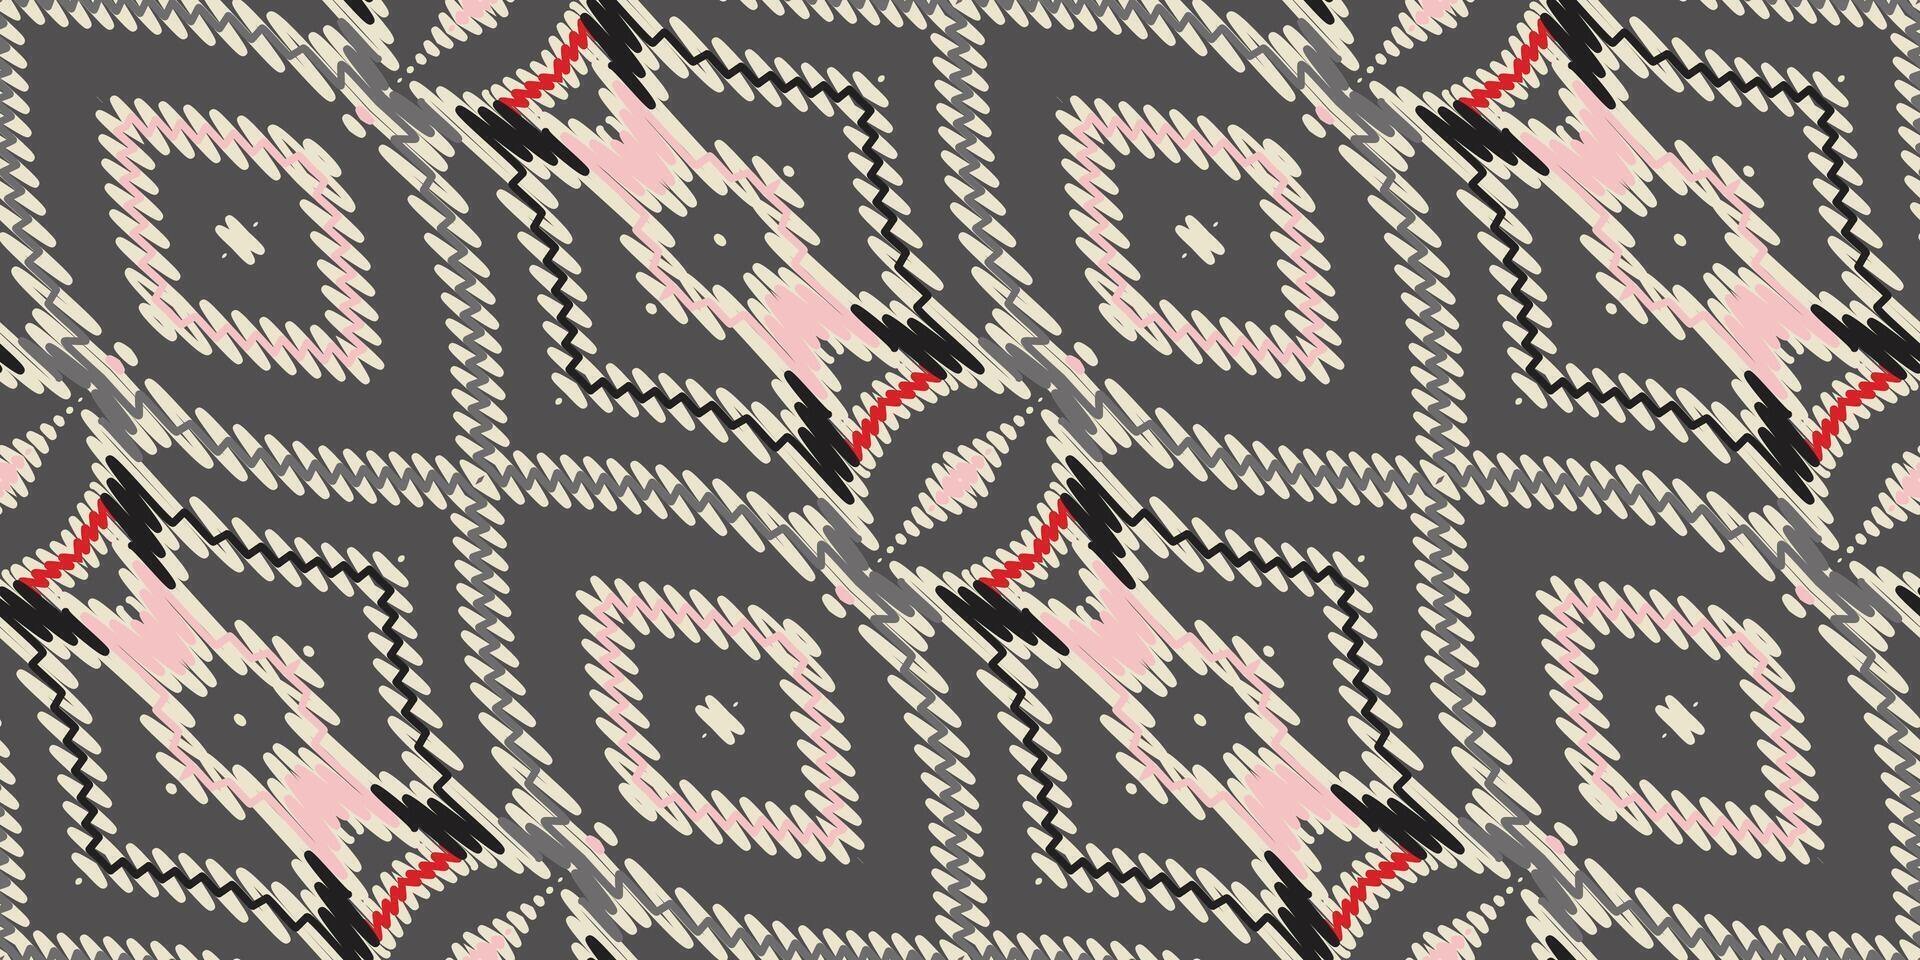 Krawatte Farbstoff Muster nahtlos skandinavisch Muster Motiv Stickerei, Ikat Stickerei Vektor Design zum drucken Rand Stickerei uralt Ägypten